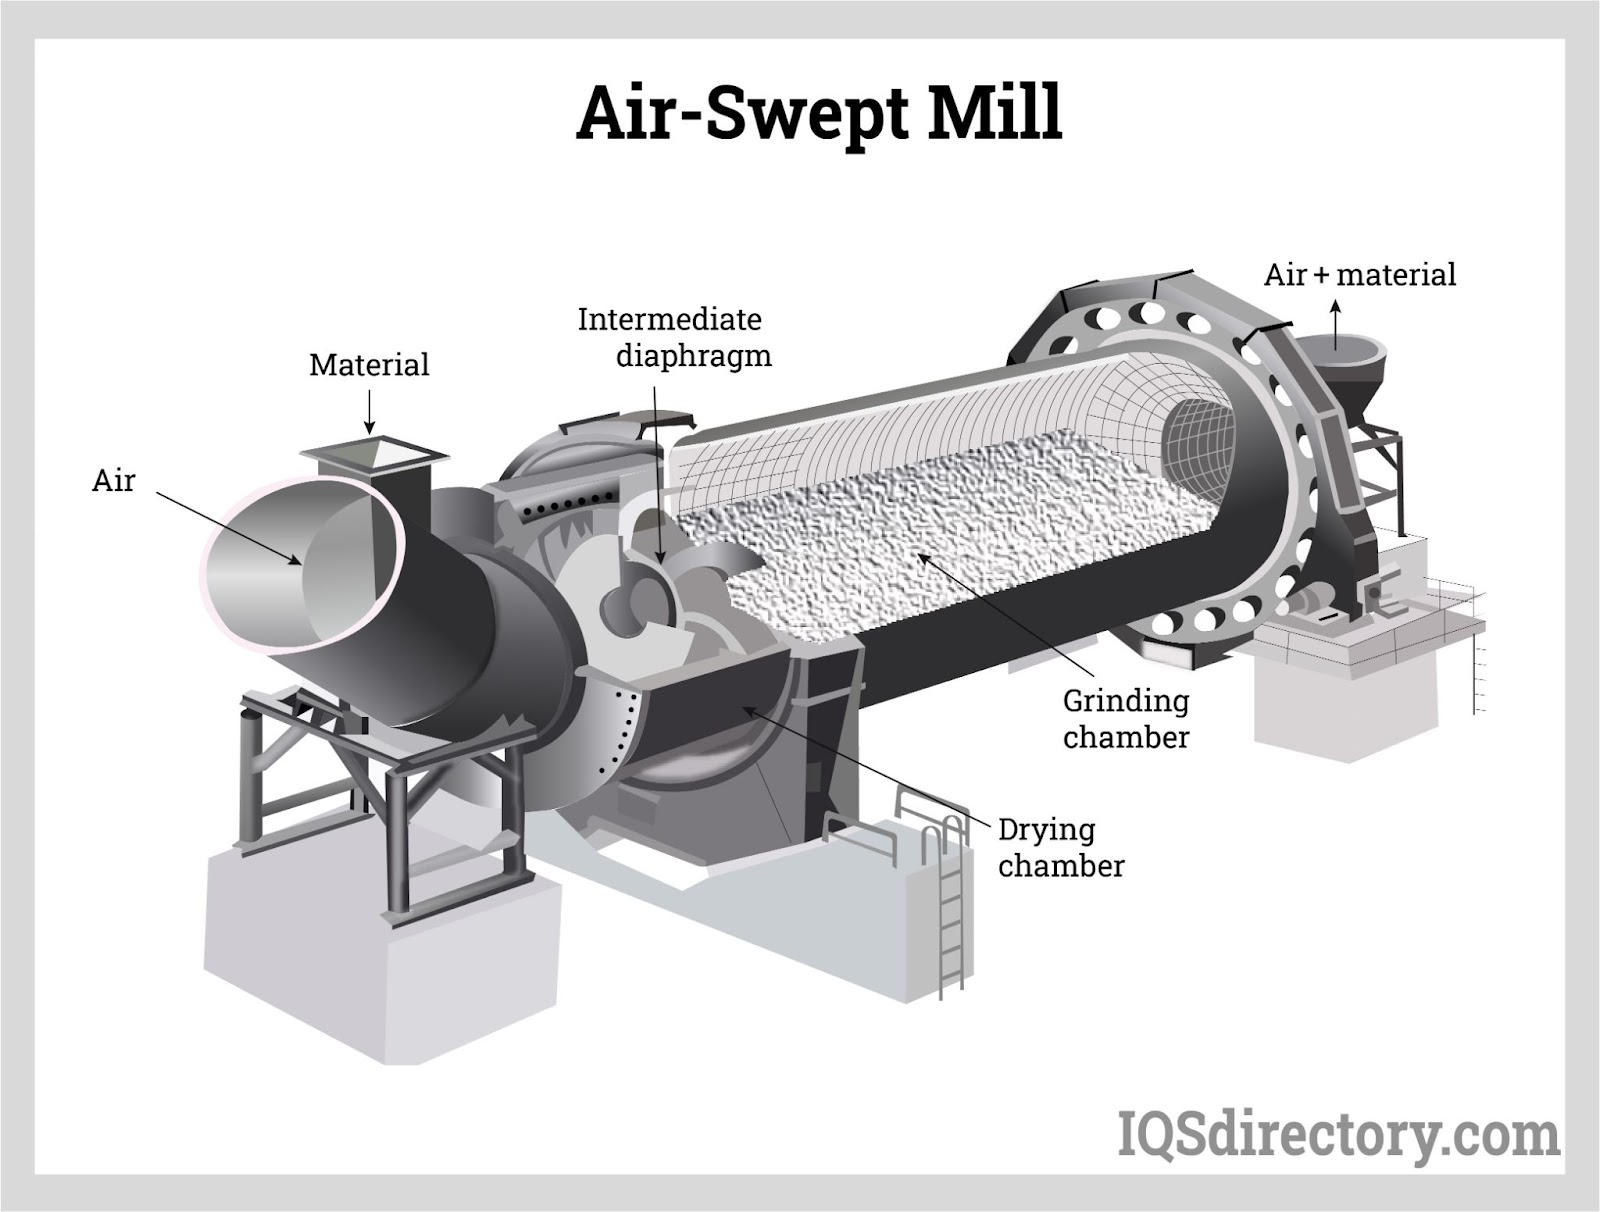 https://www.iqsdirectory.com/articles/industrial-mills/air-swept-mill.jpg